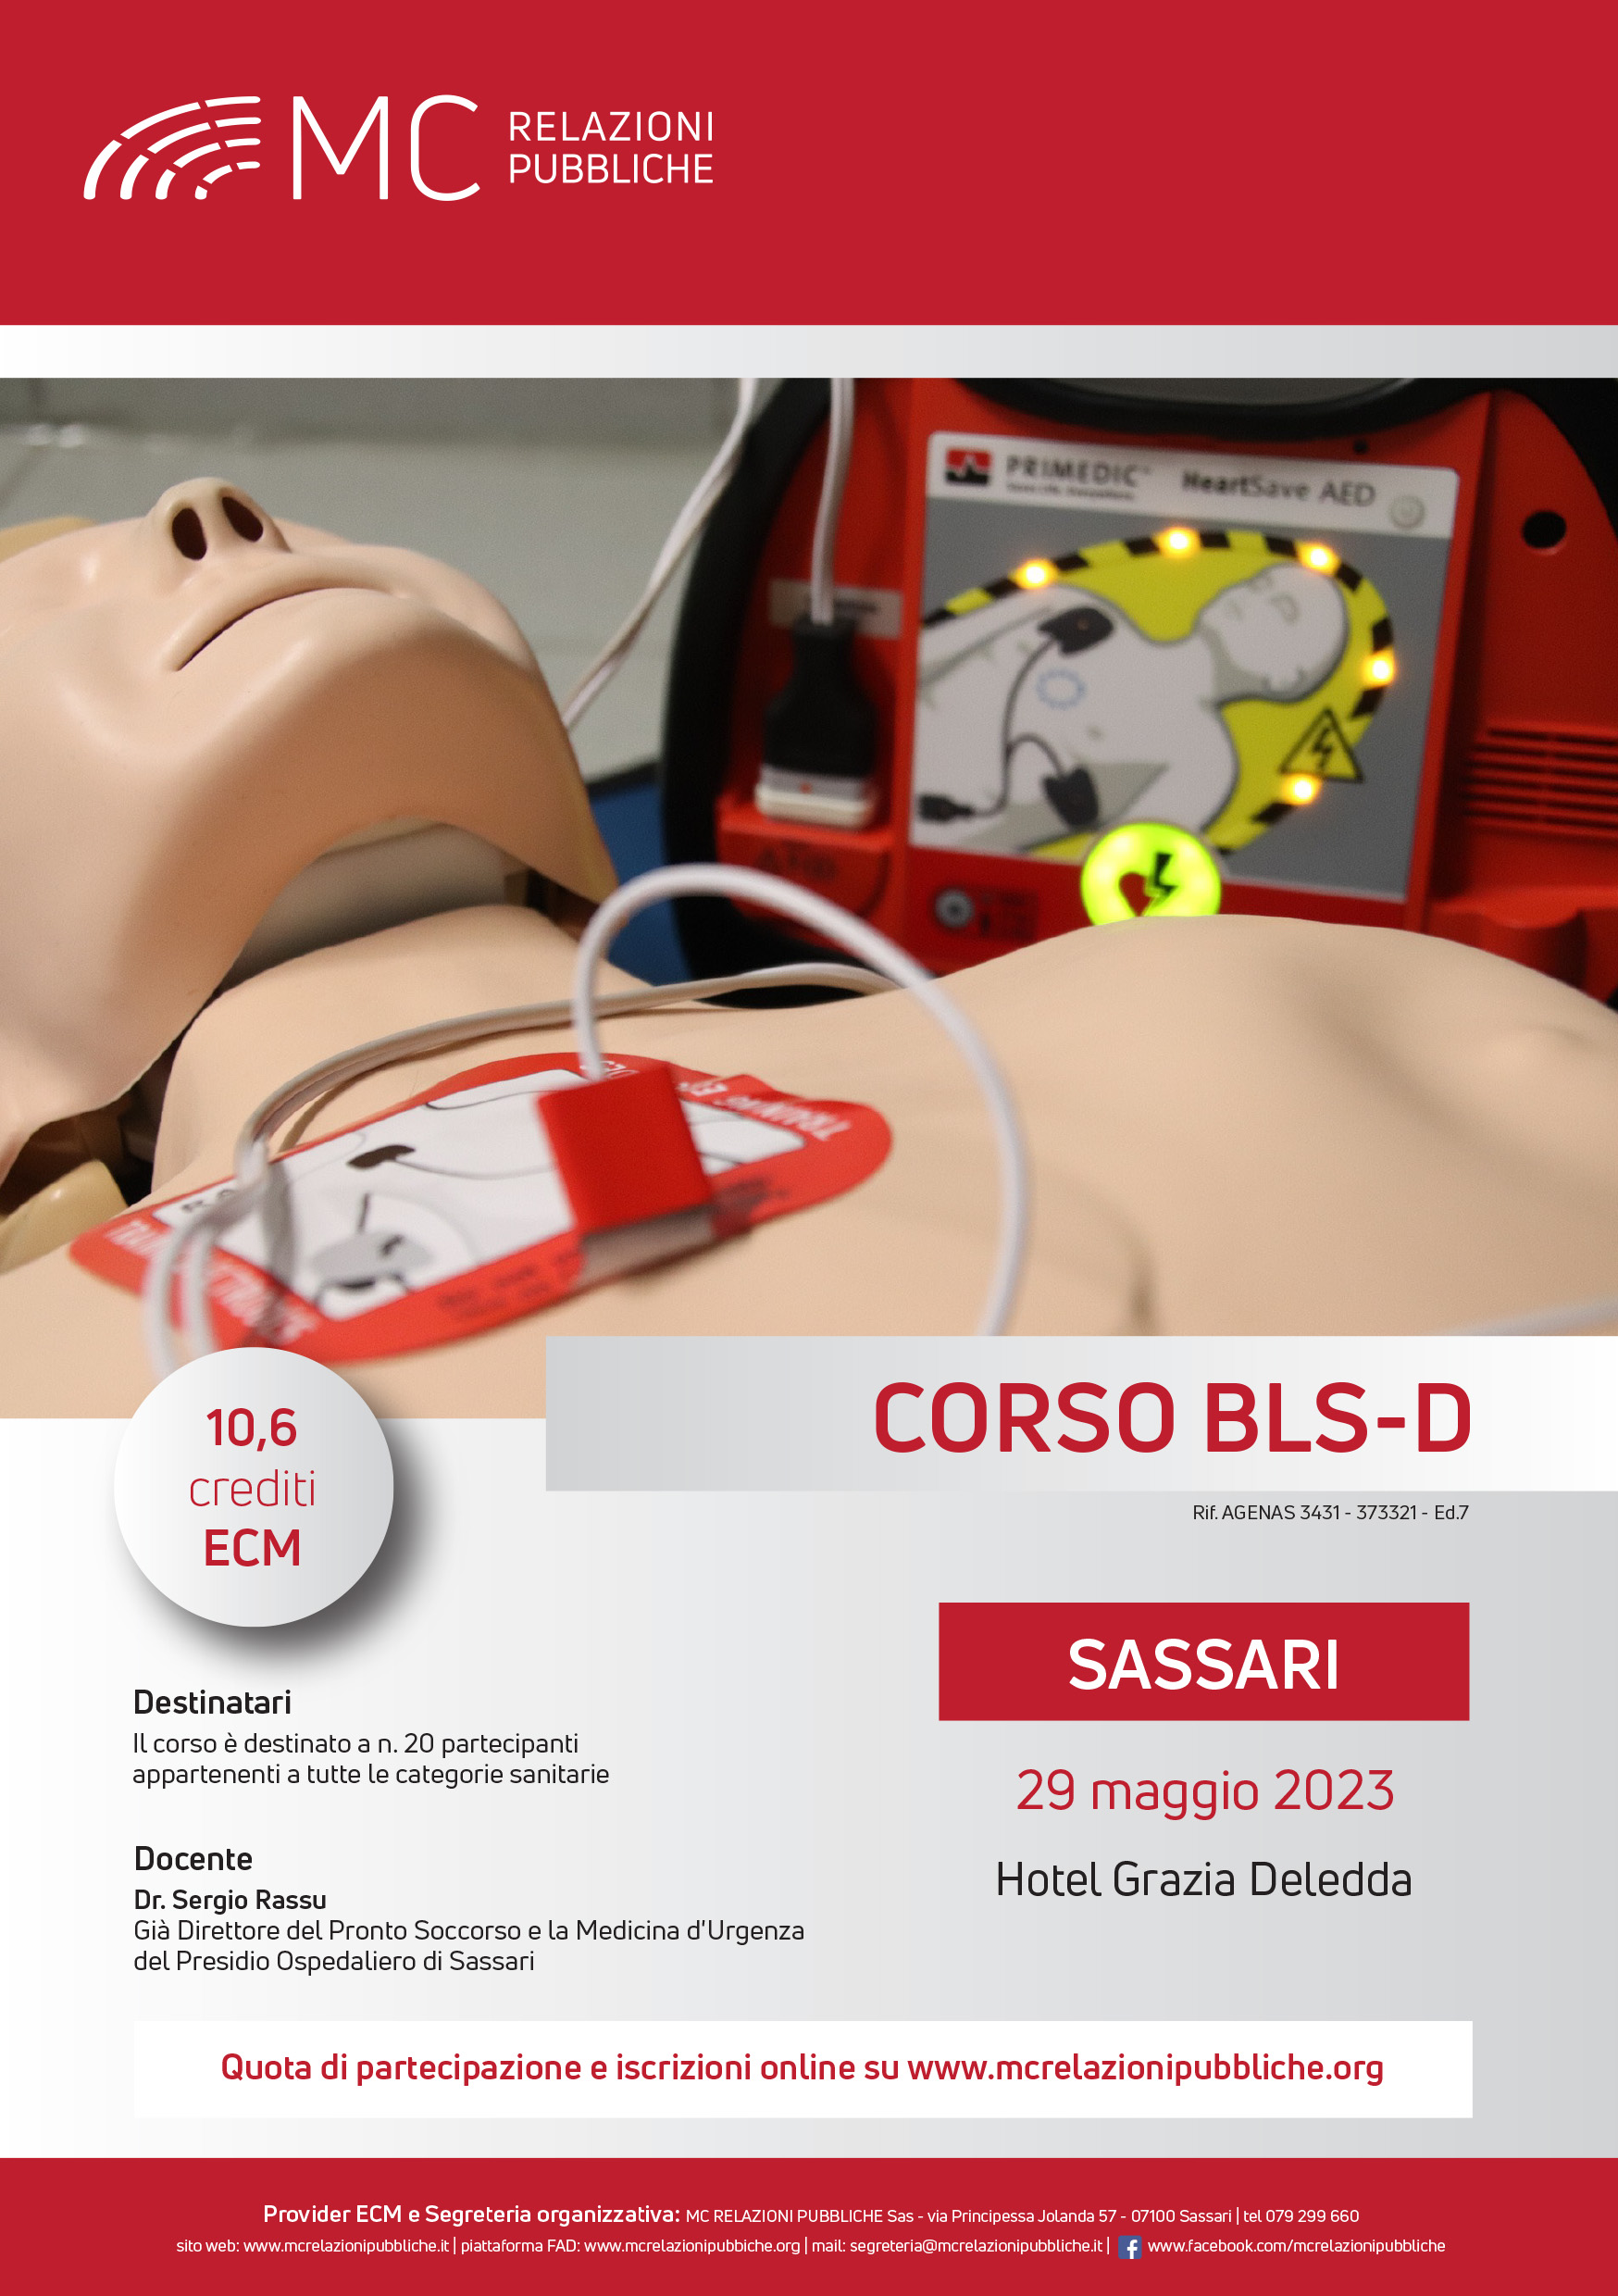 Corso BLS-D. Basic Life Support-Defibrillation - 29 maggio 2023